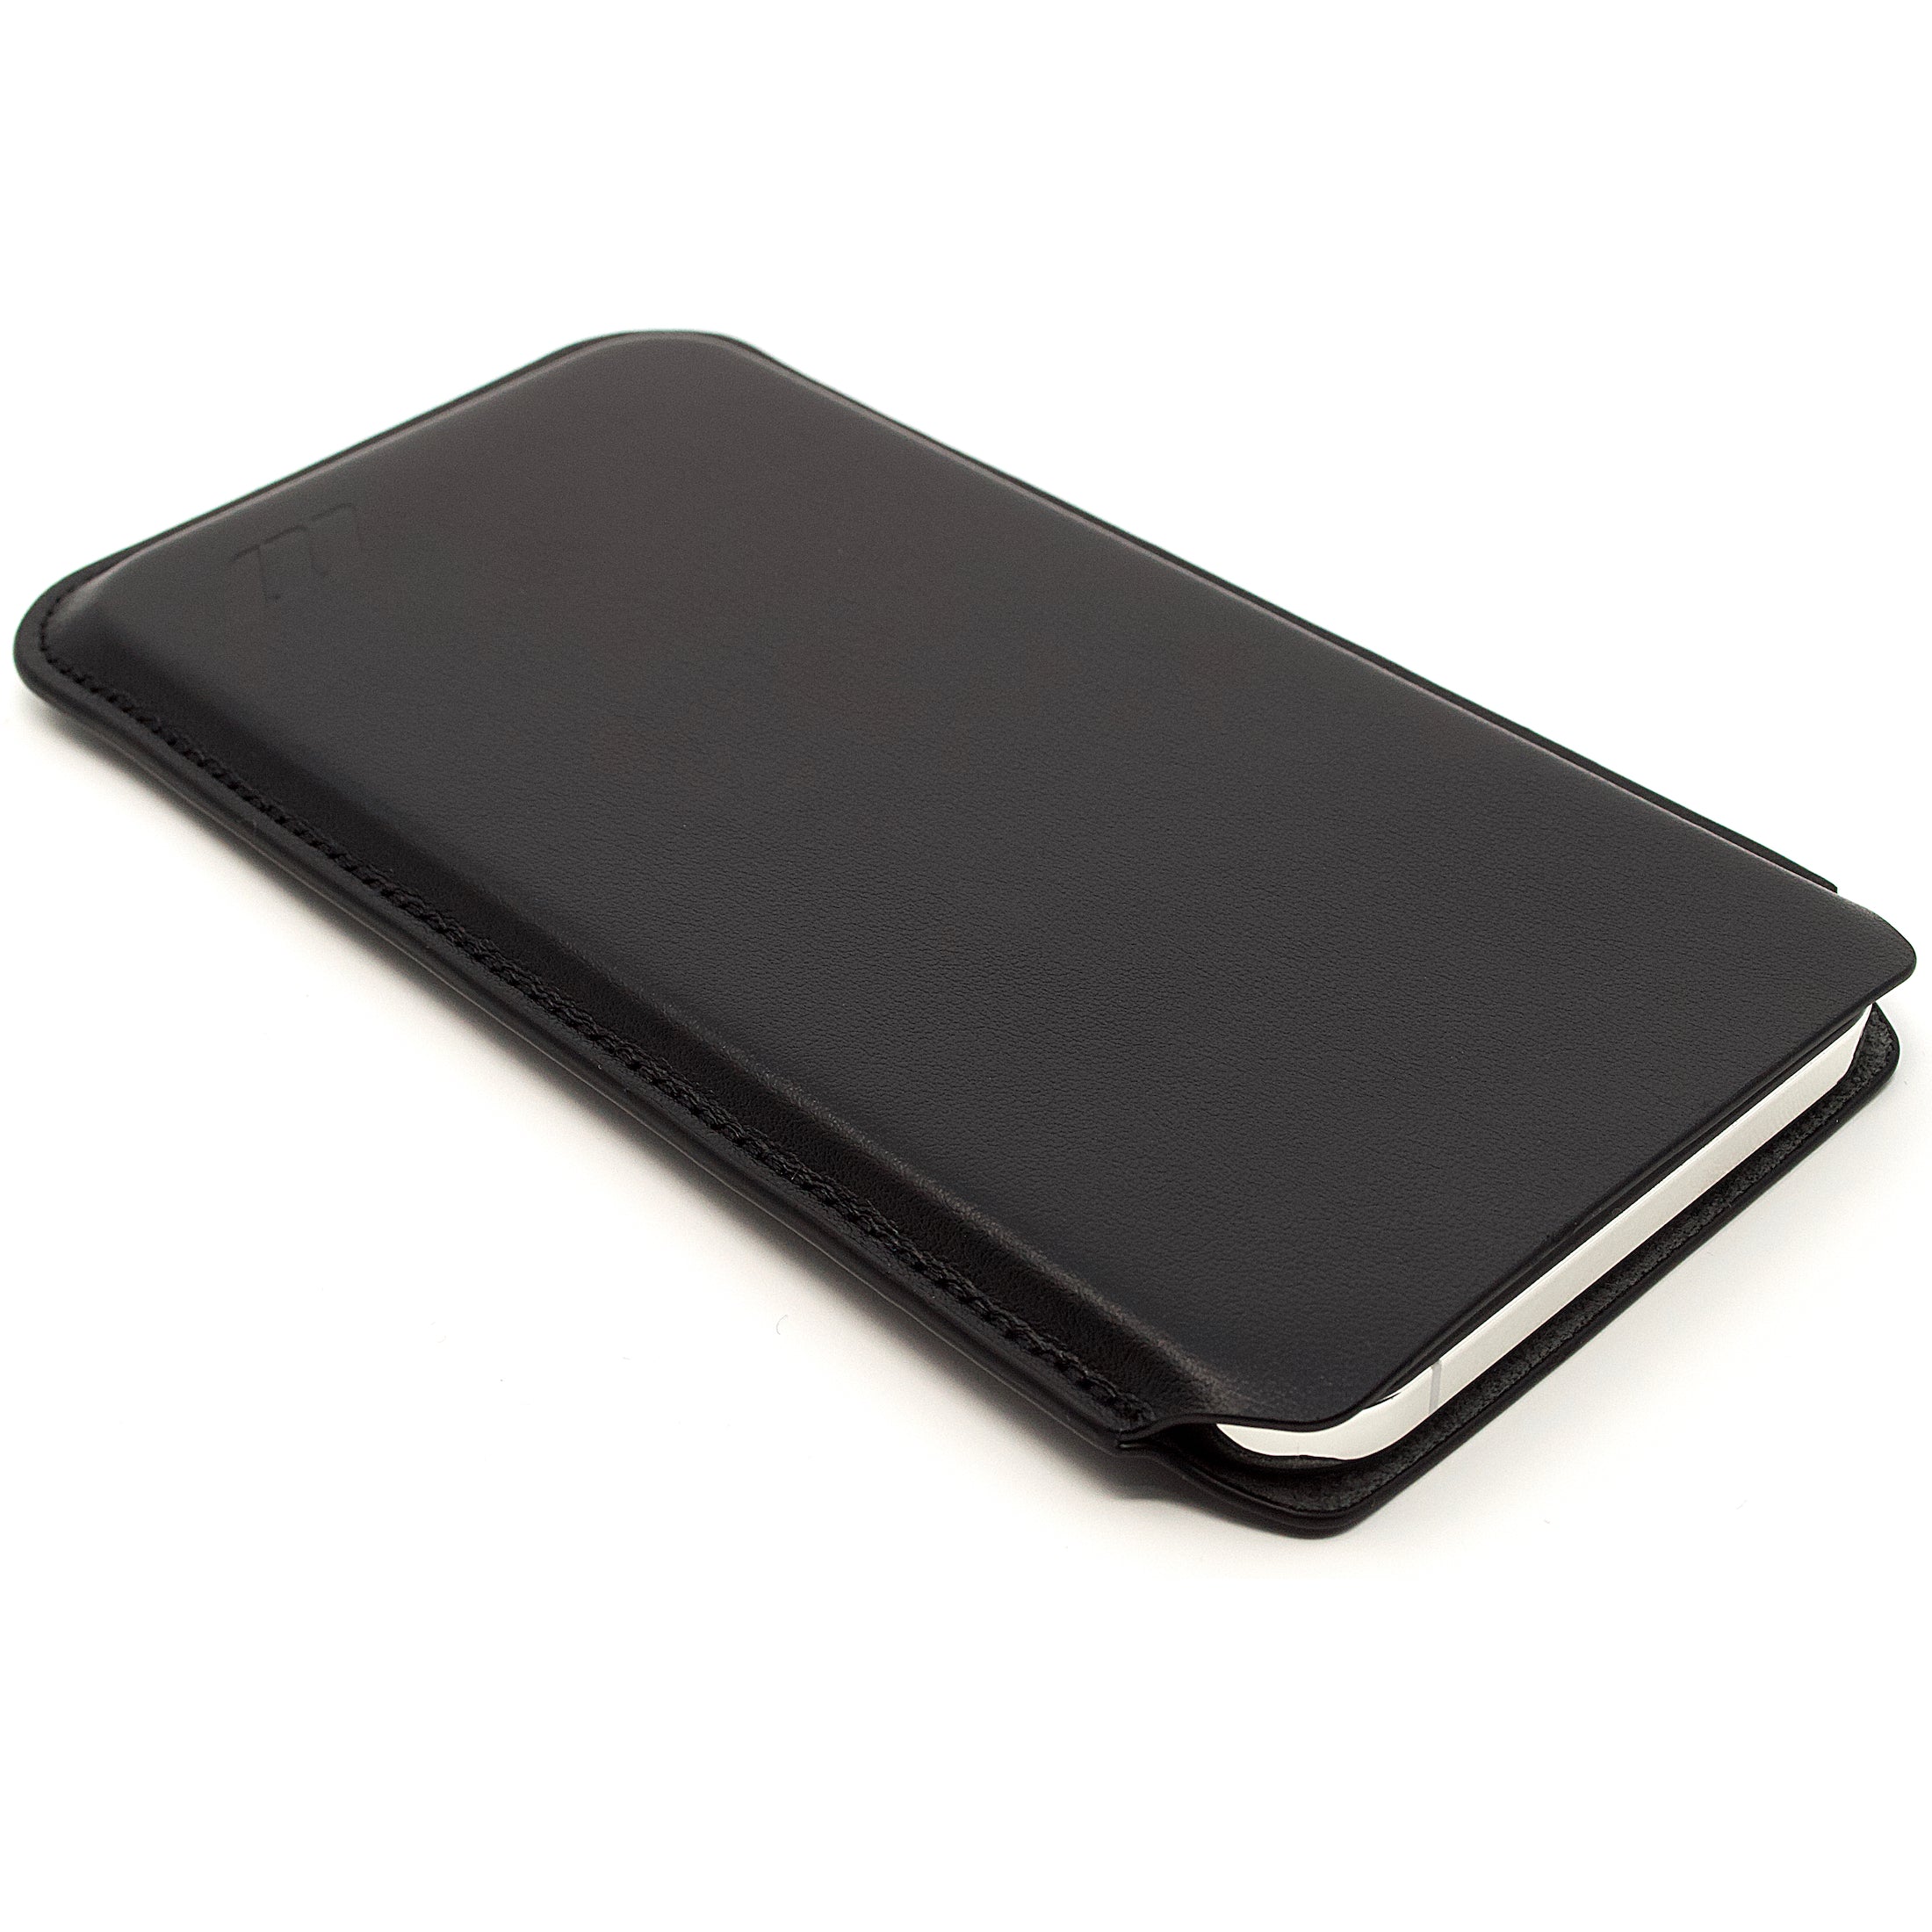 Apple iPhone 12 Series Sleeve Cases